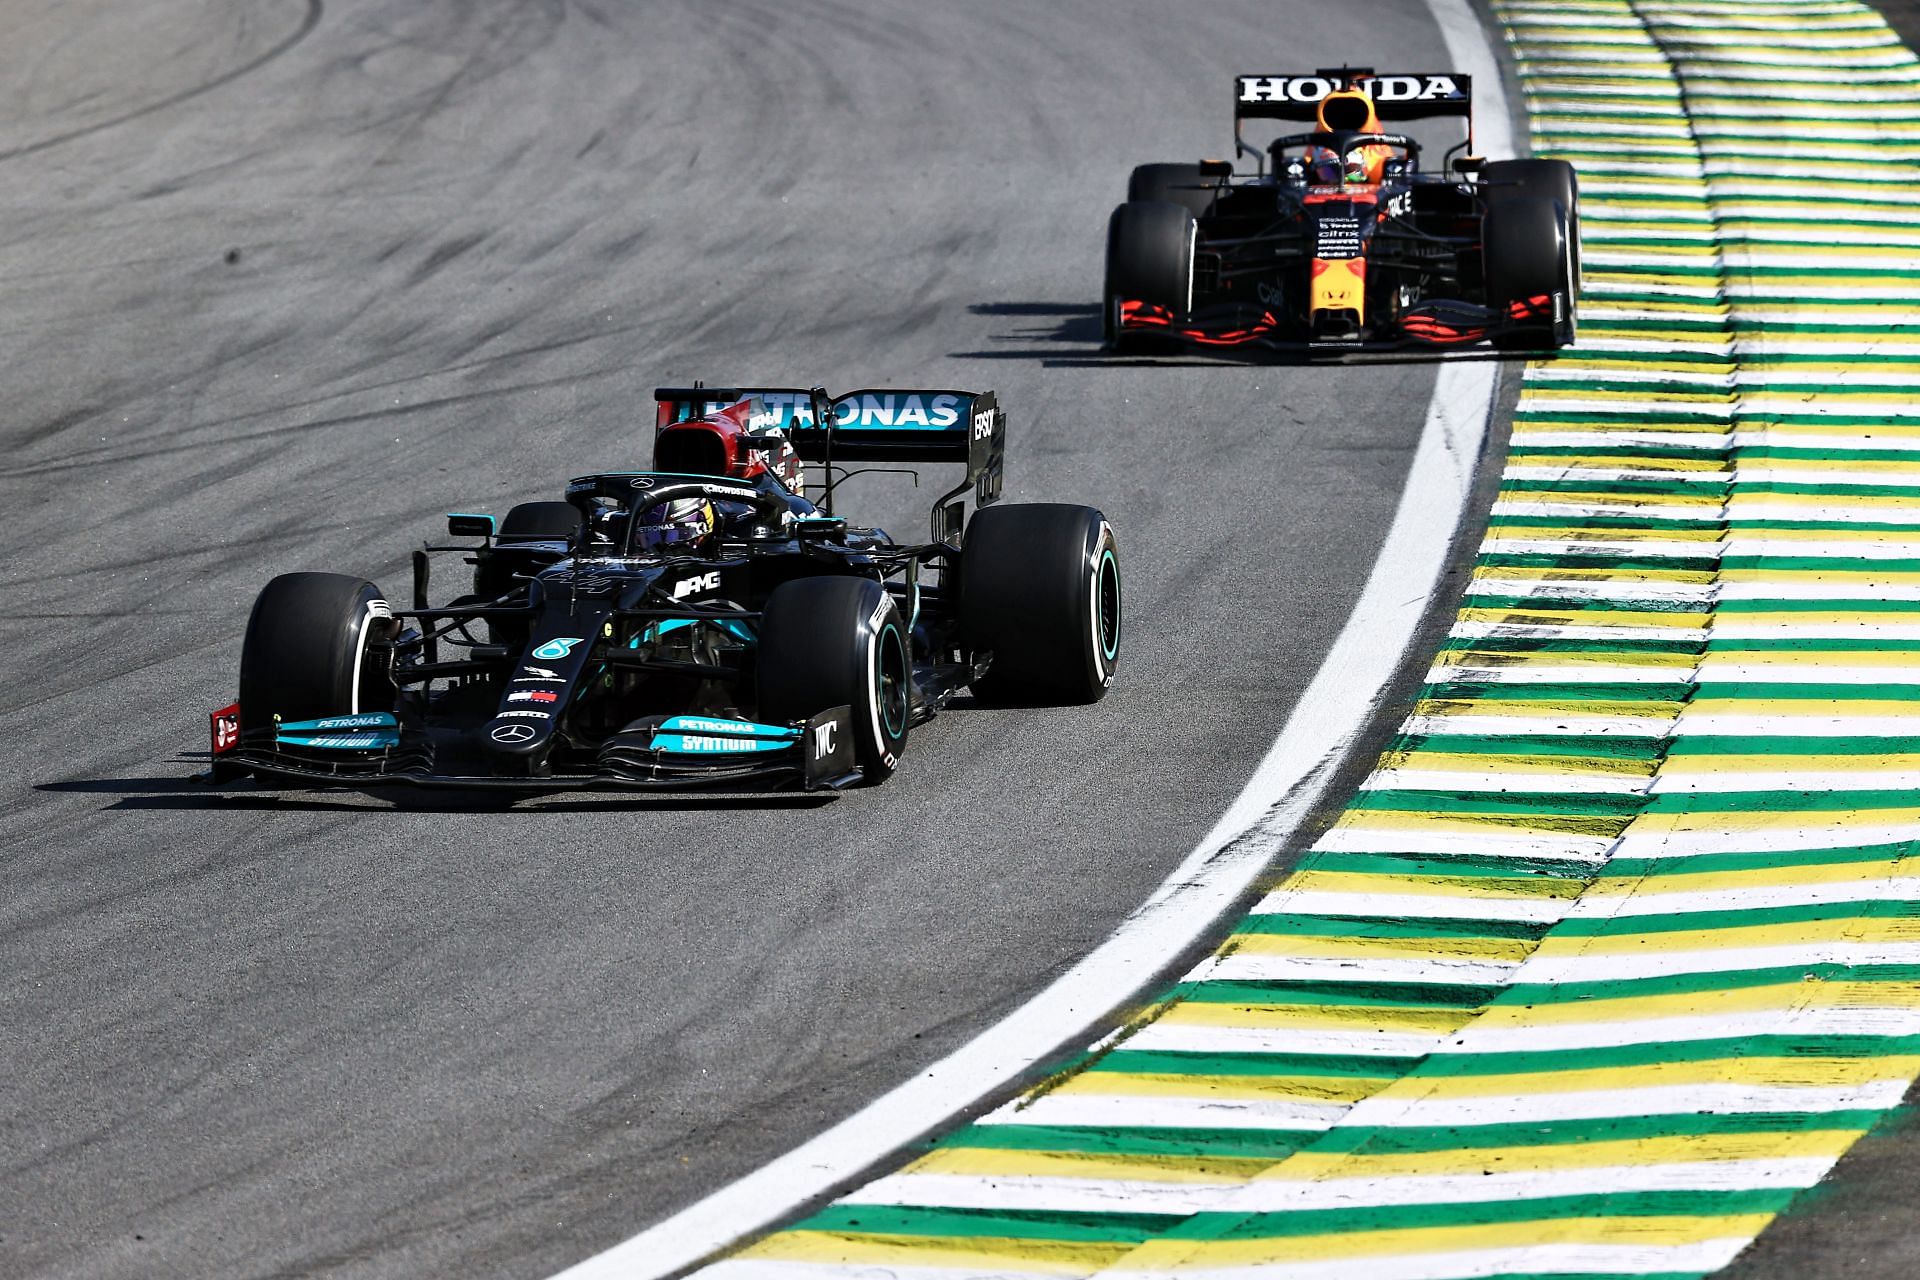 F1 Grand Prix of Brazil Grand Prix